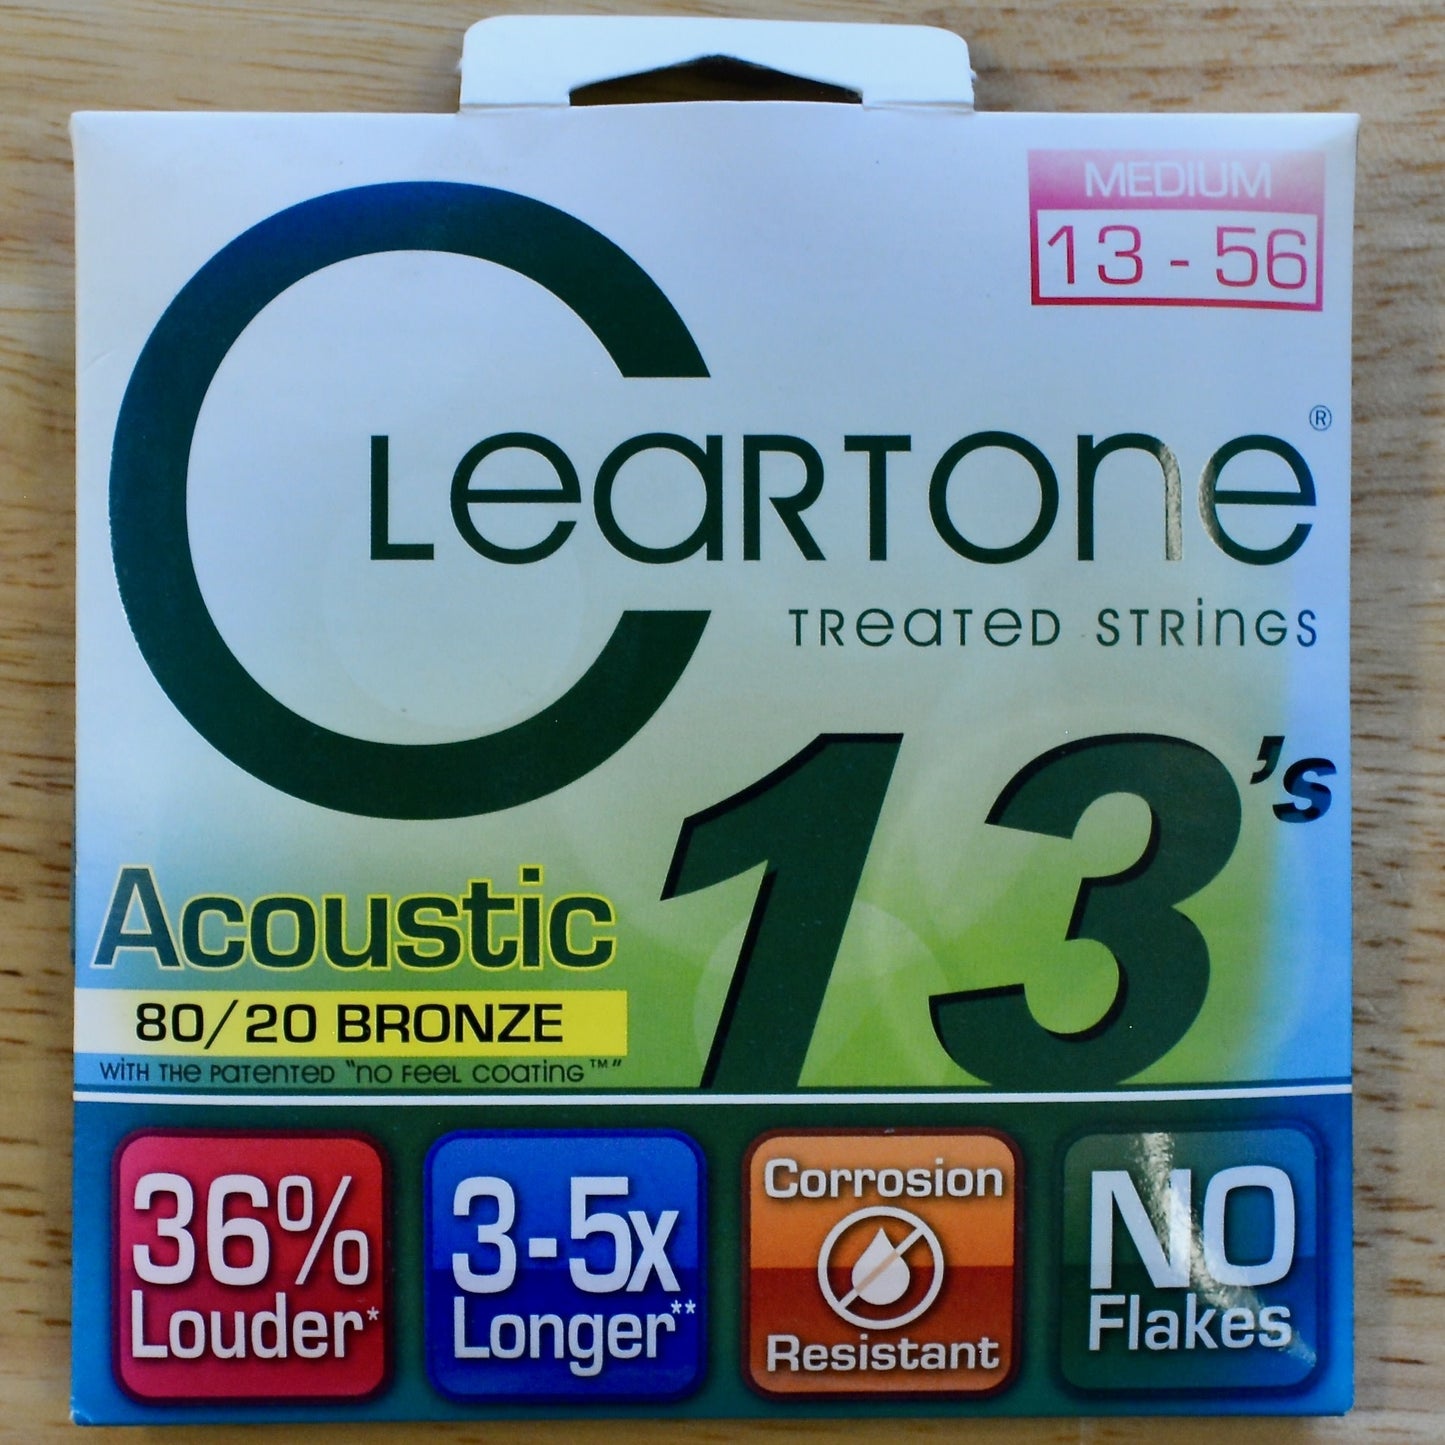 Cleartone Treated Acoustic Strings 80/20 Bronze Medium